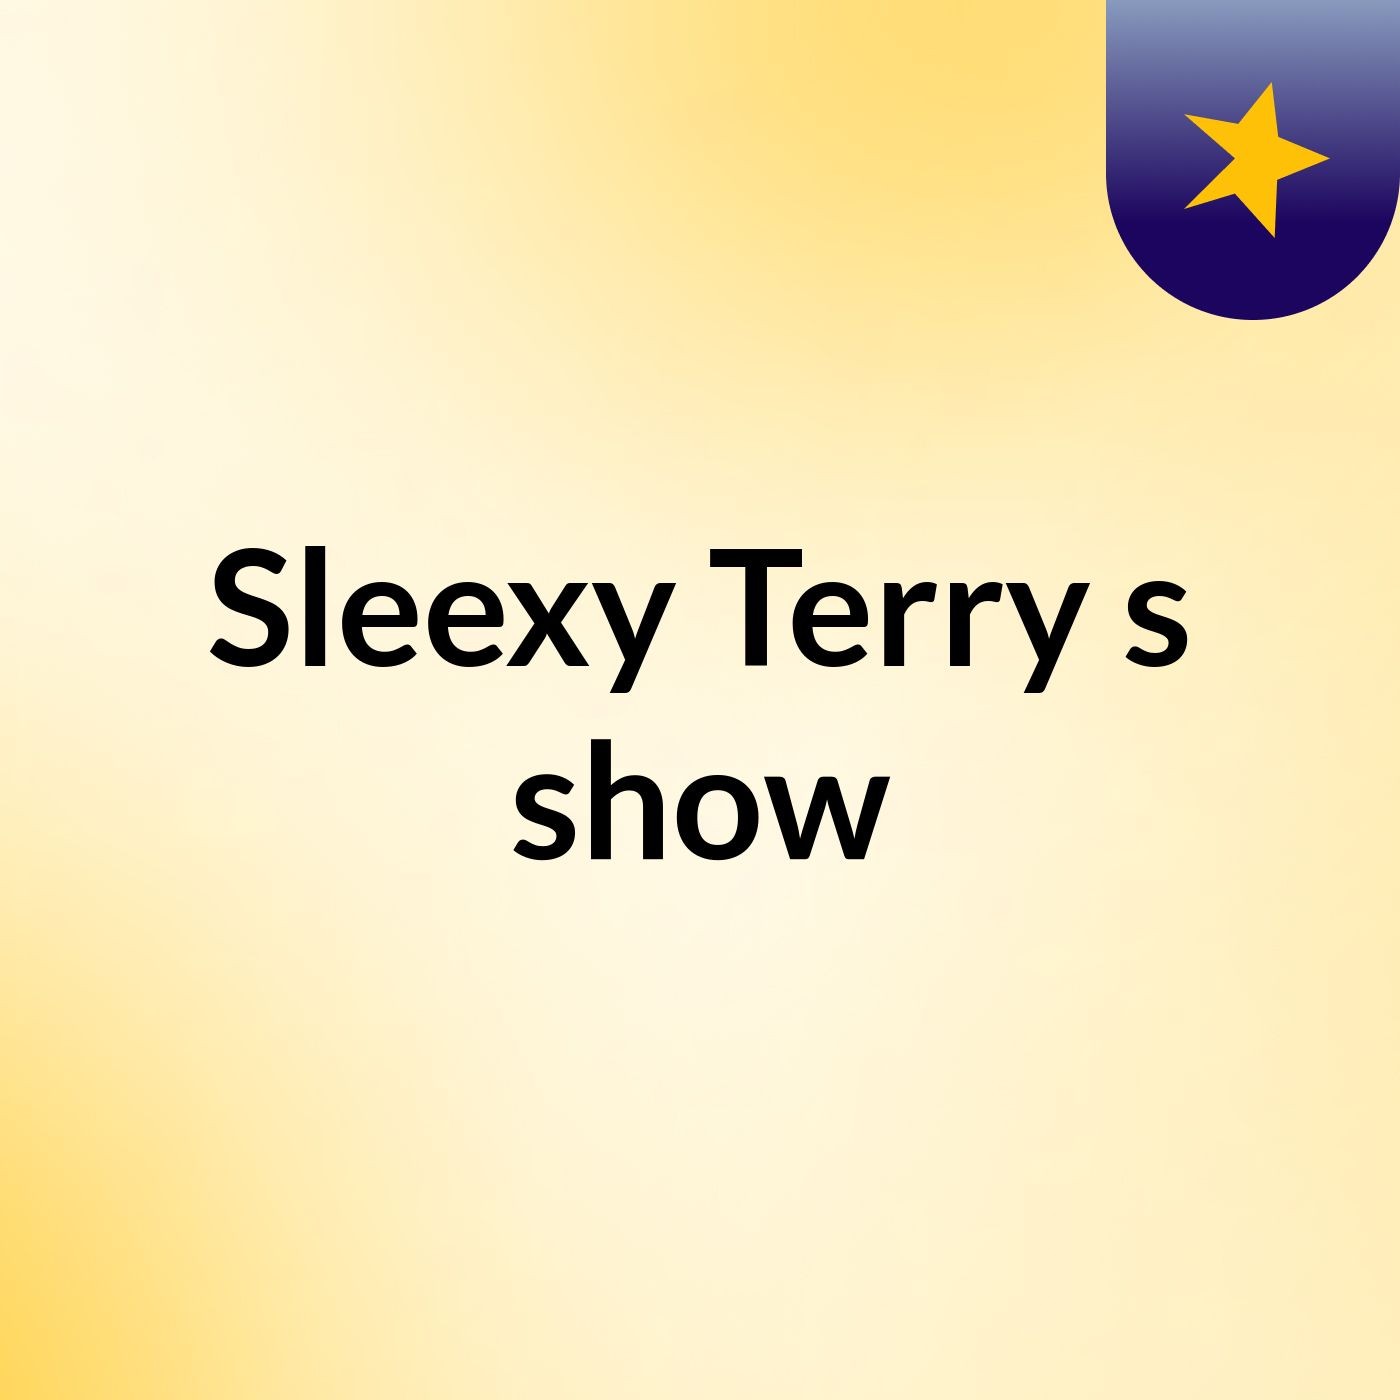 Sleexy Terry's show